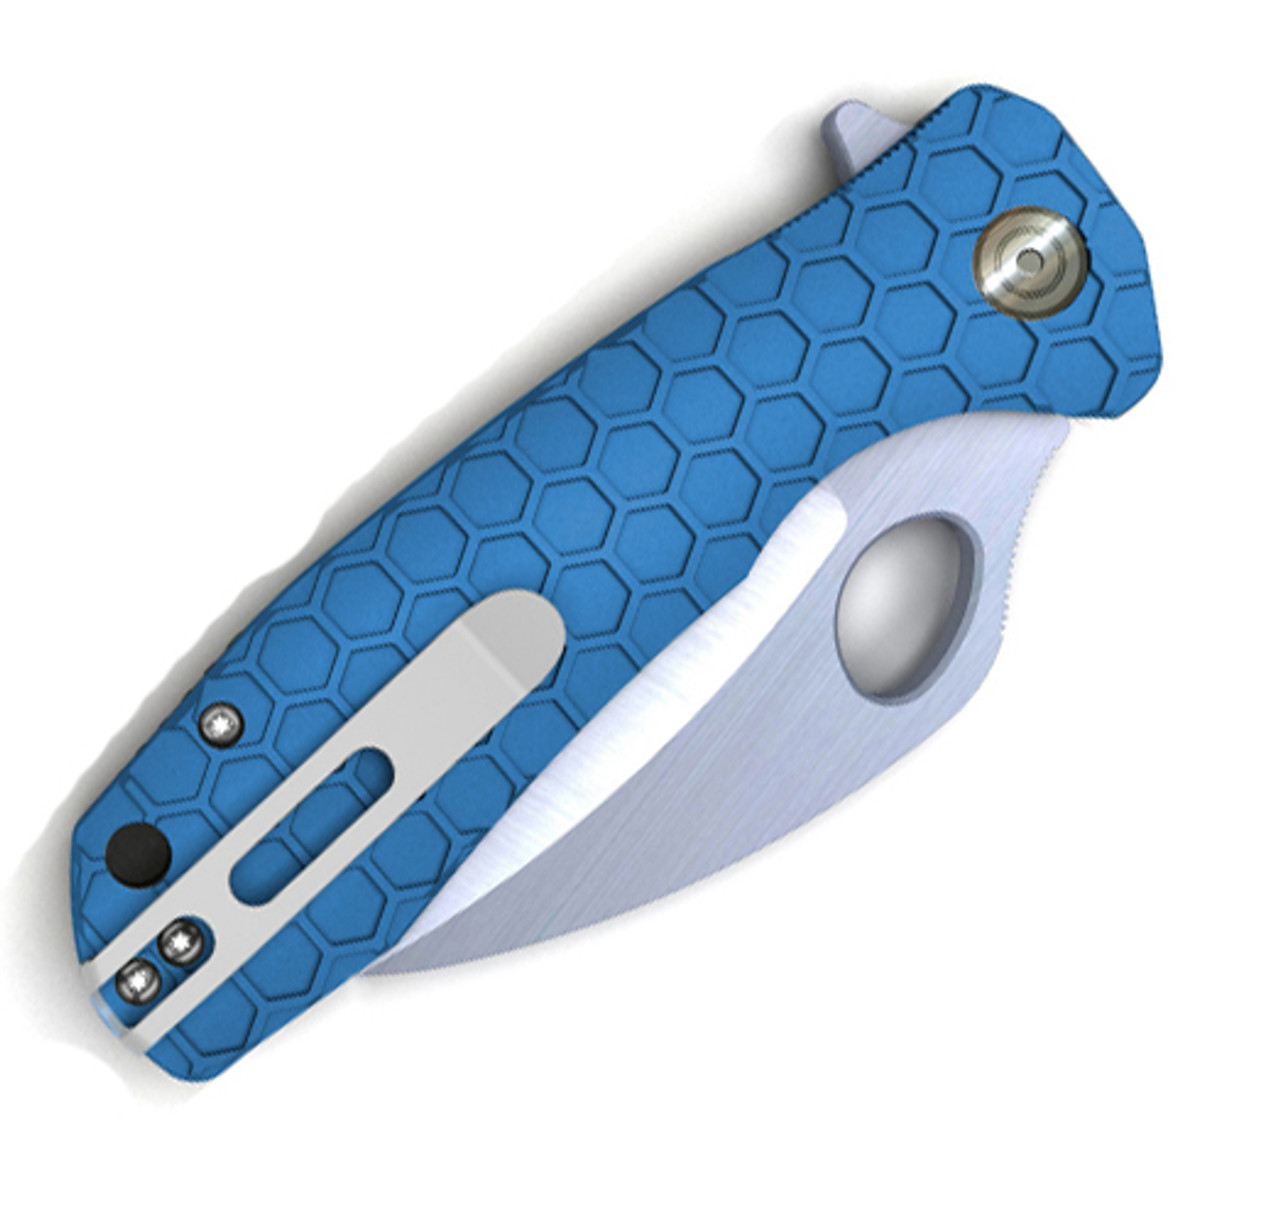 Honey Badger Knives Medium D2 Claw Flipper HB1128, 3.0" D2 Claw  Serrated Blade, Blue FRN Handle